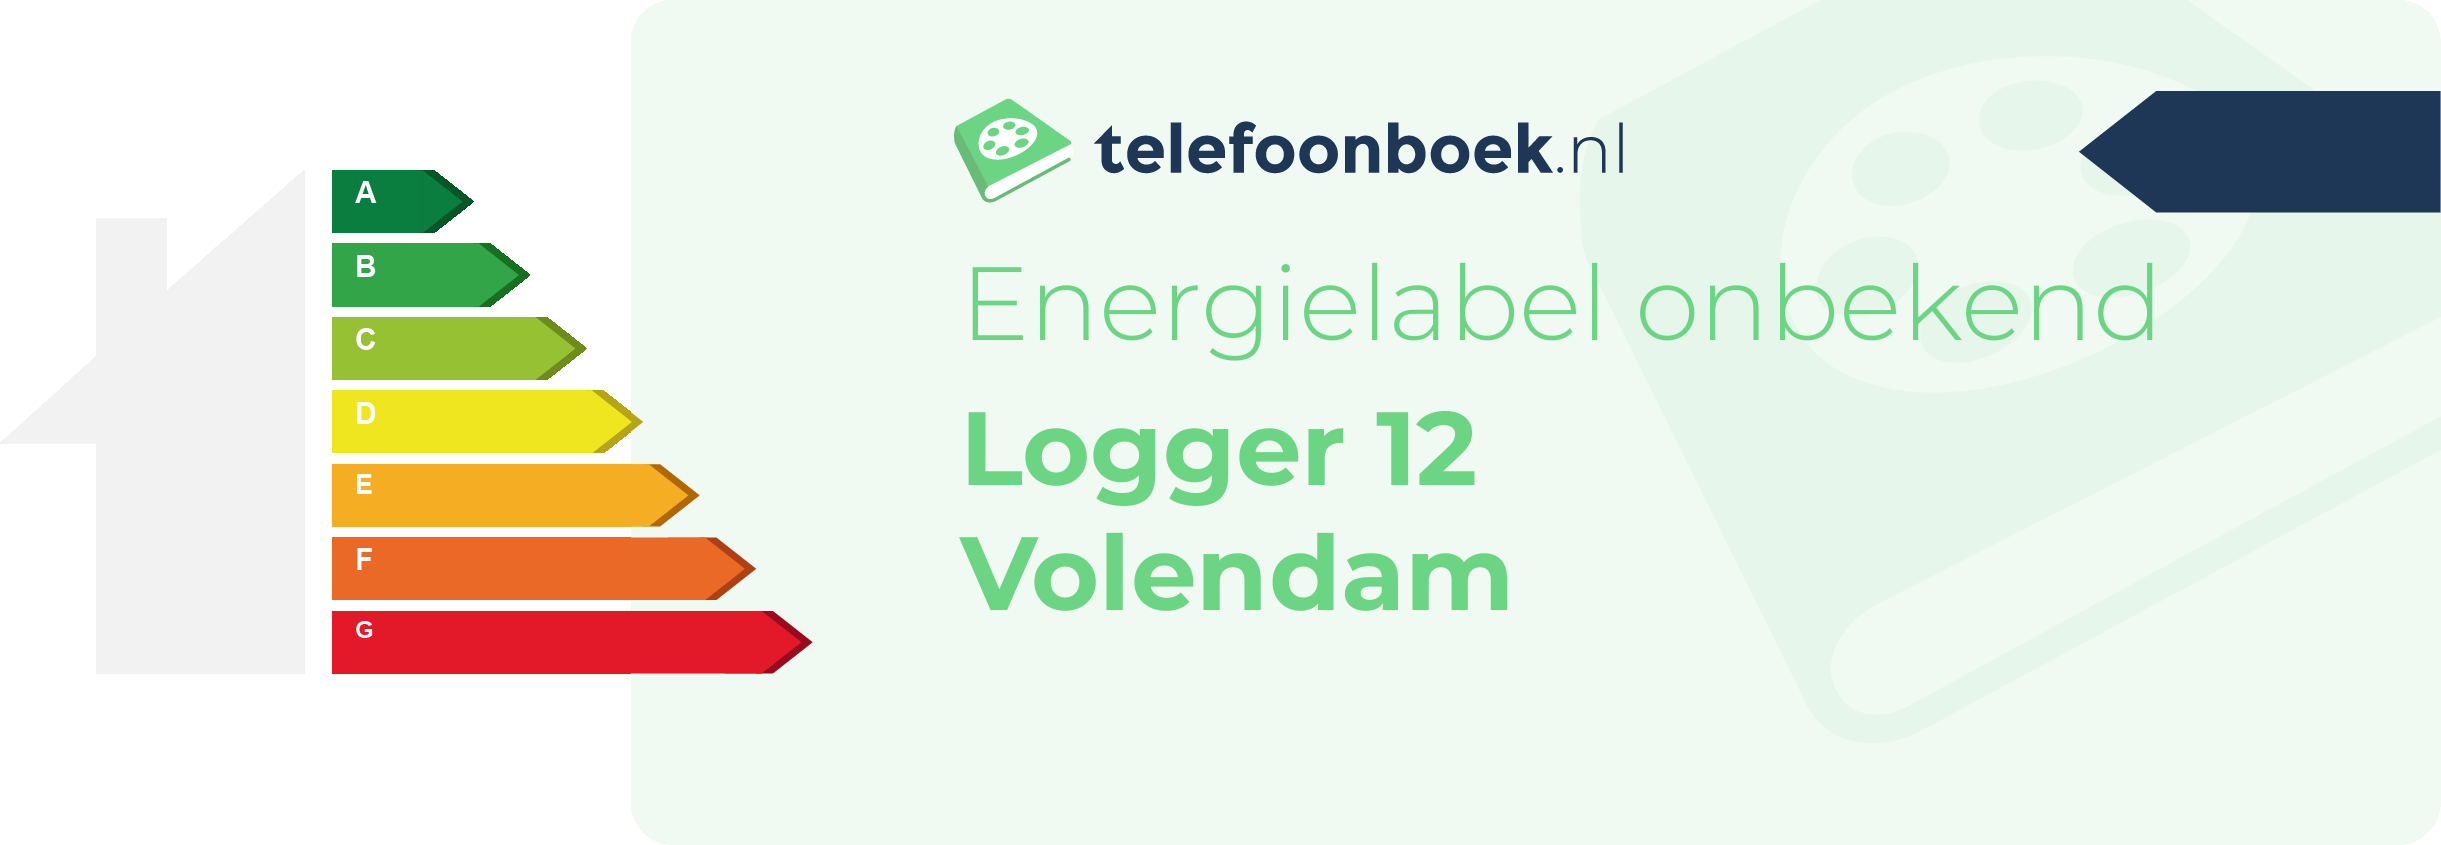 Energielabel Logger 12 Volendam